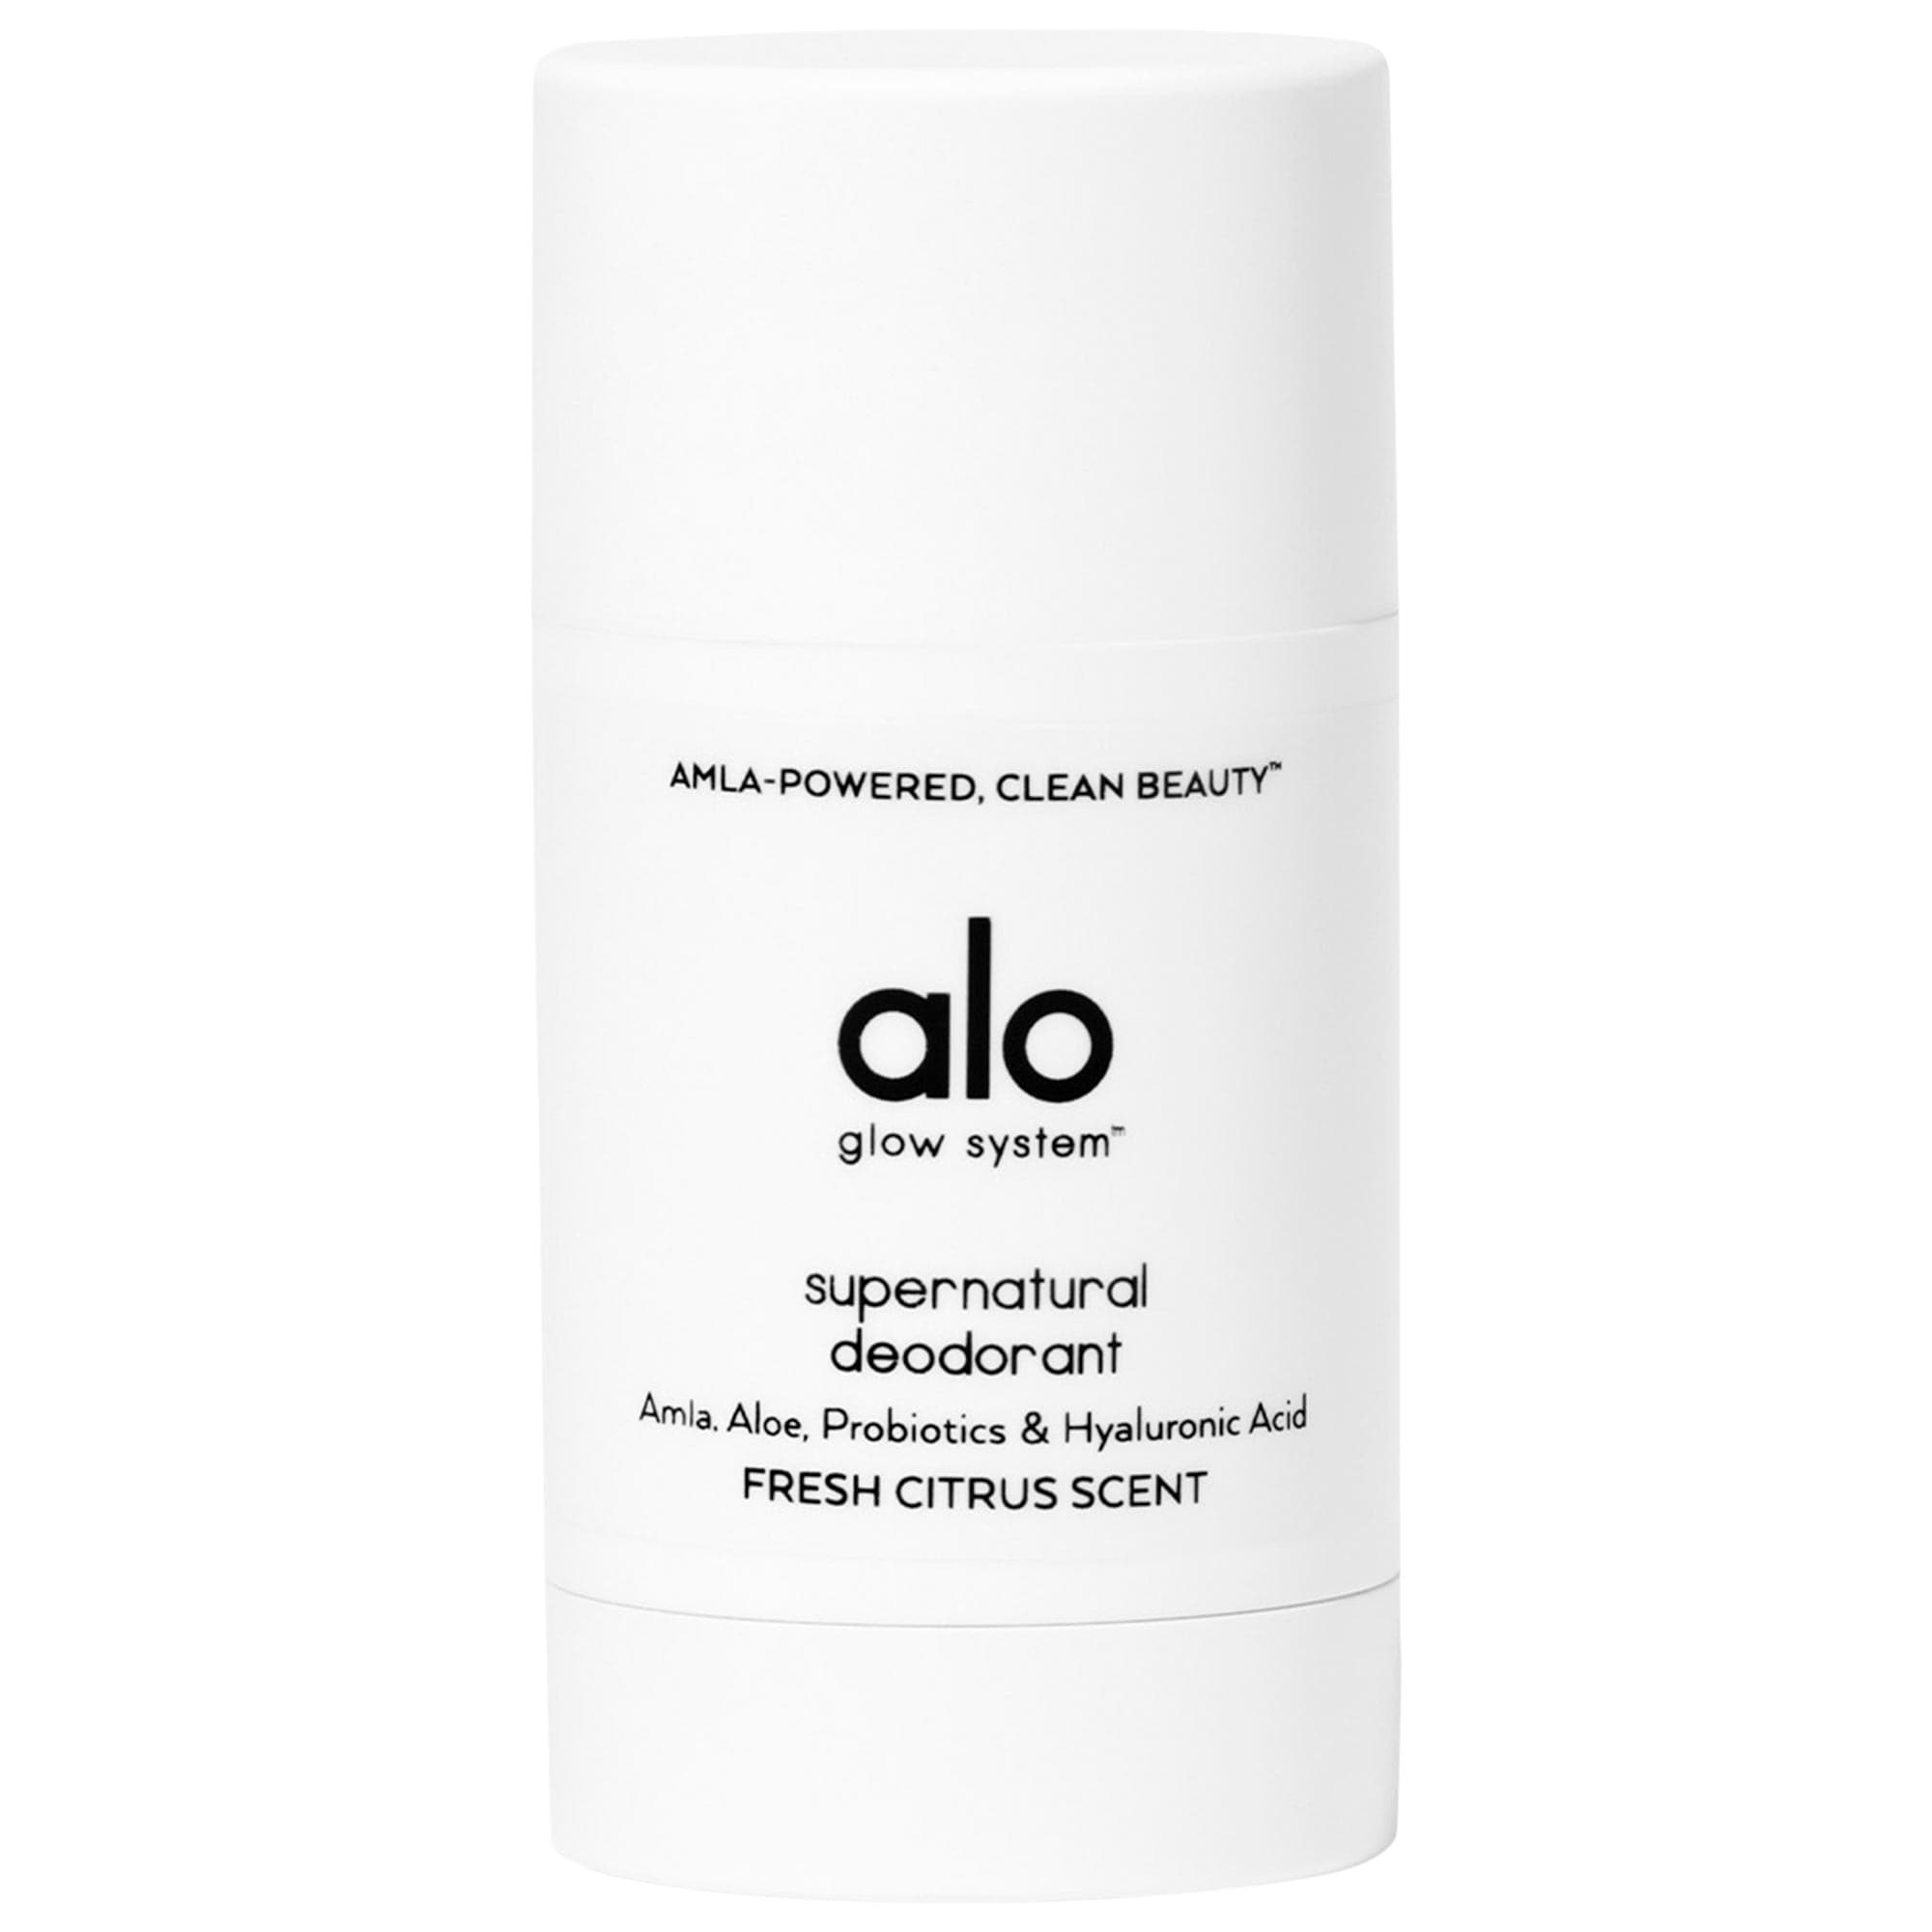 Сверхъестественный дезодорант без алюминия с пробиотиками, препятствующими запаху ALO